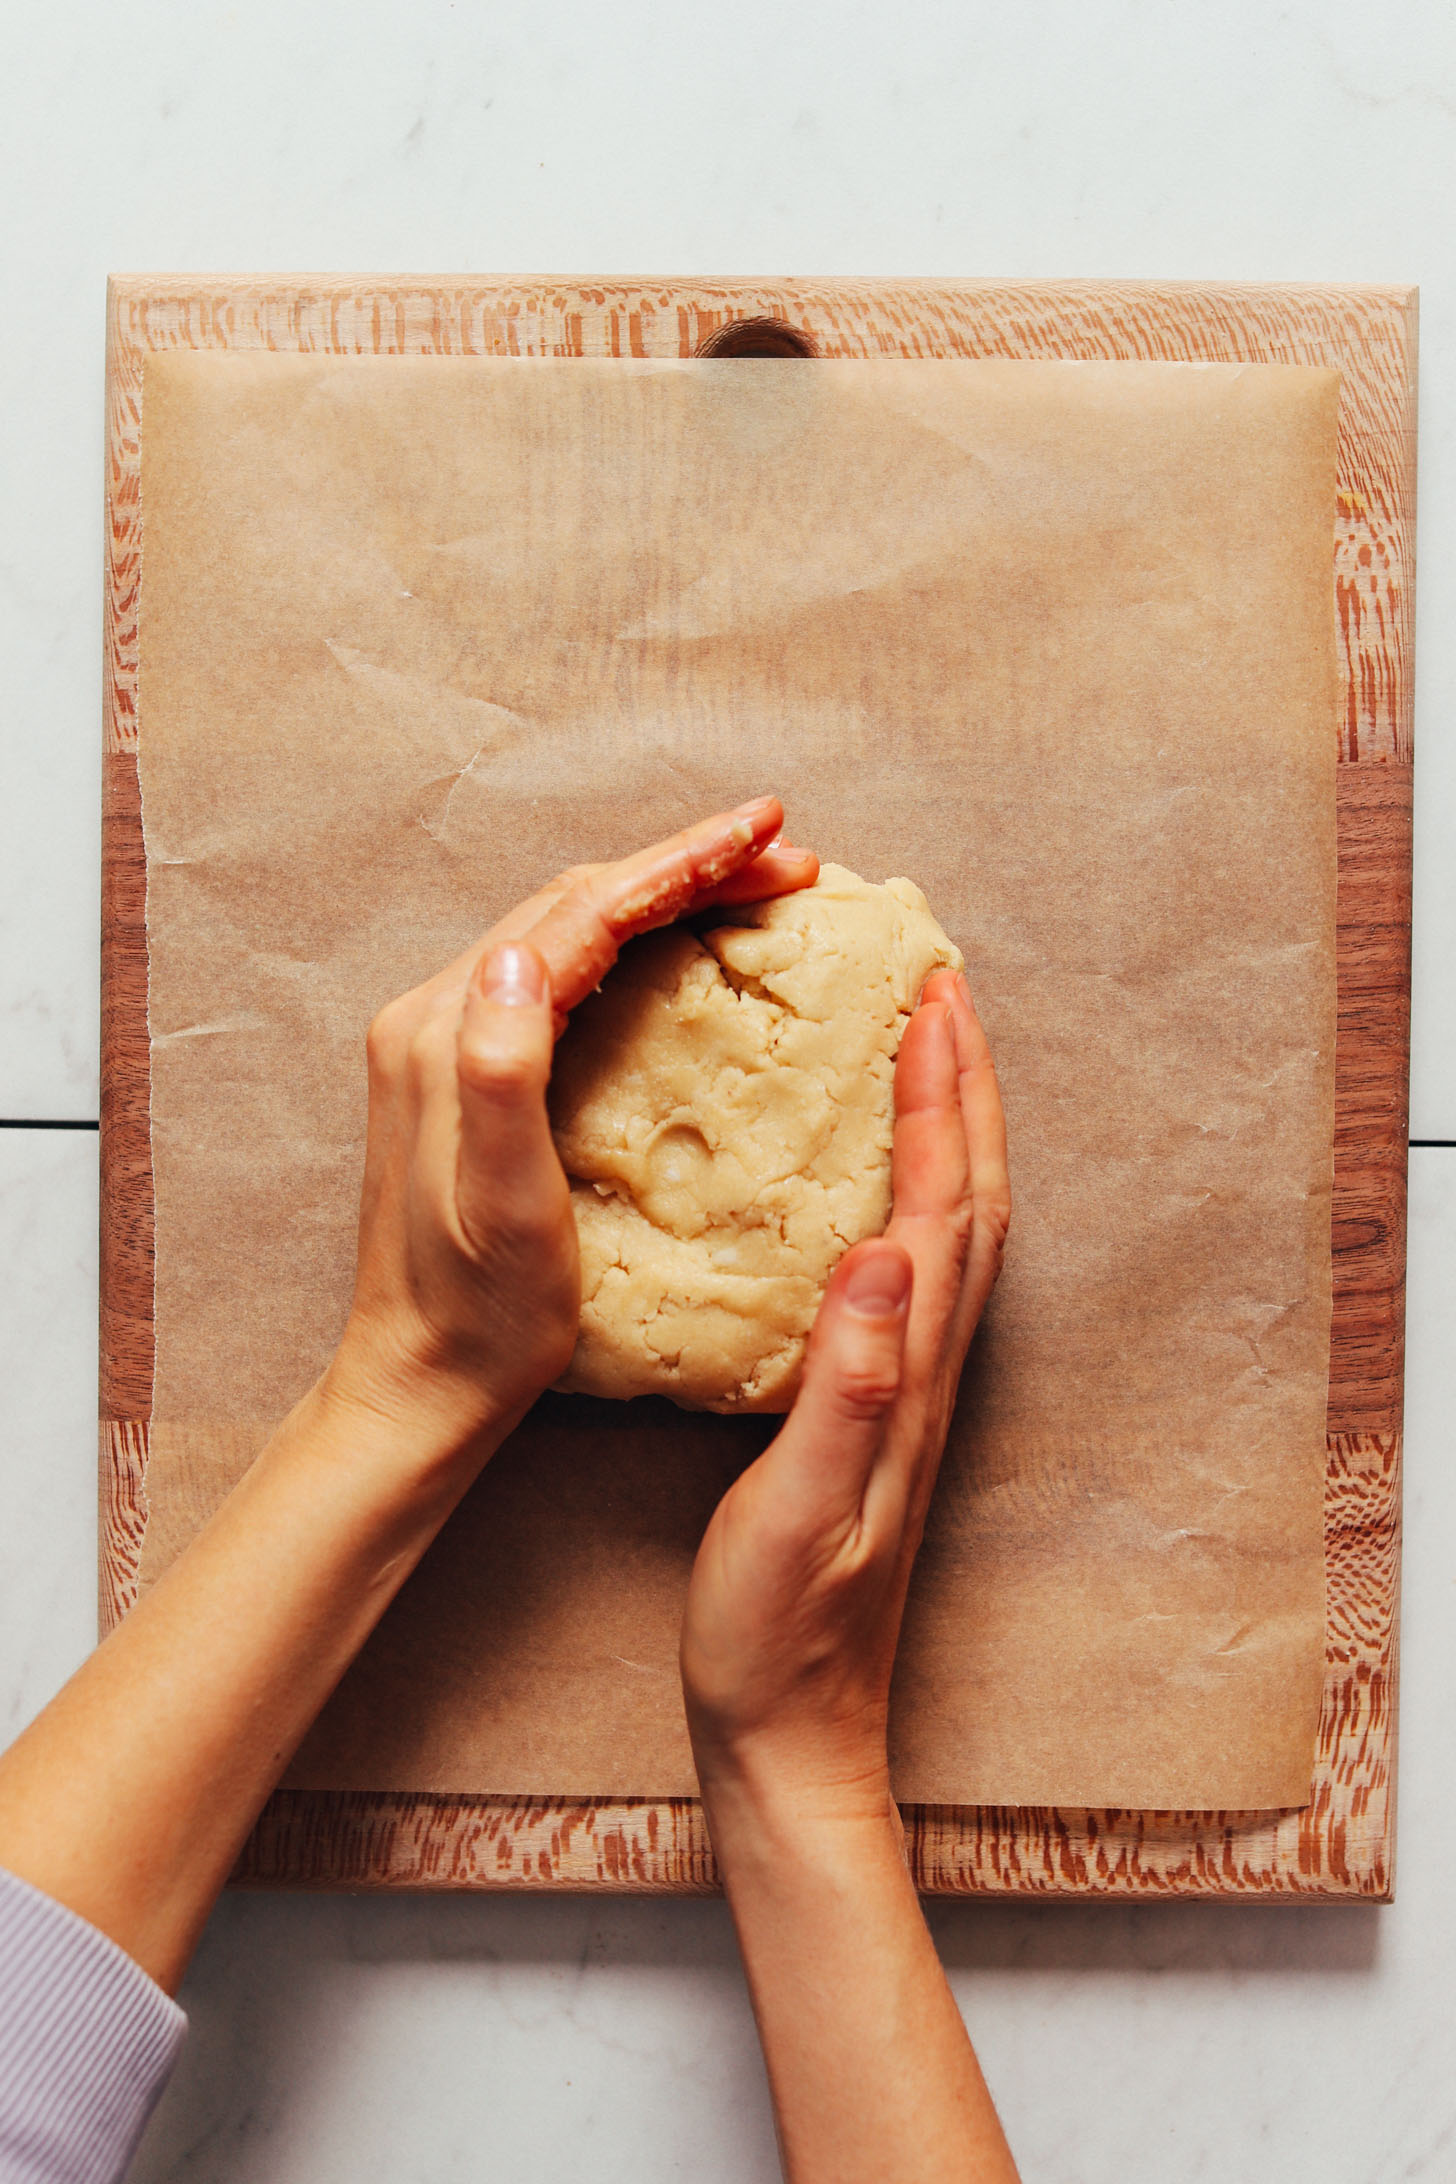 Shaping a ball of gluten-free vegan shortbread cookie dough